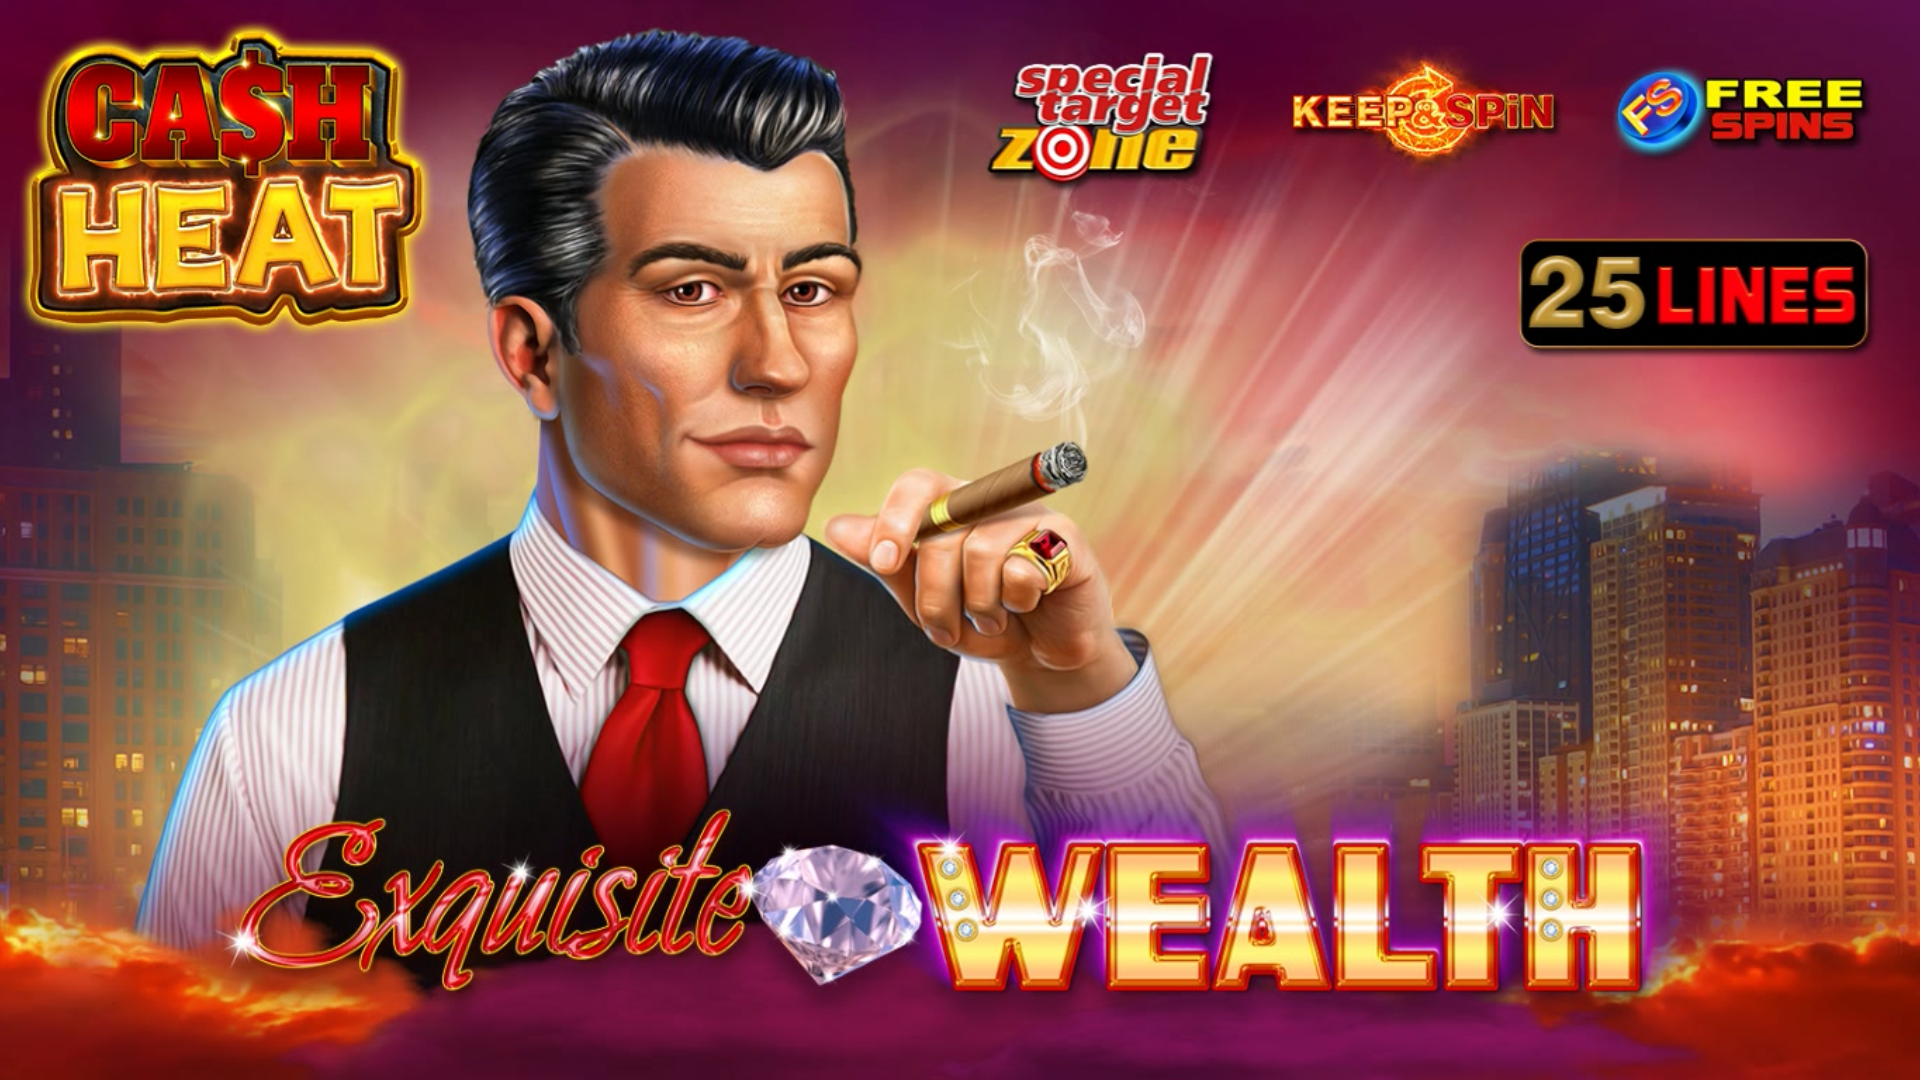 egt games general series bonus prize general exquisite wealth cash heat